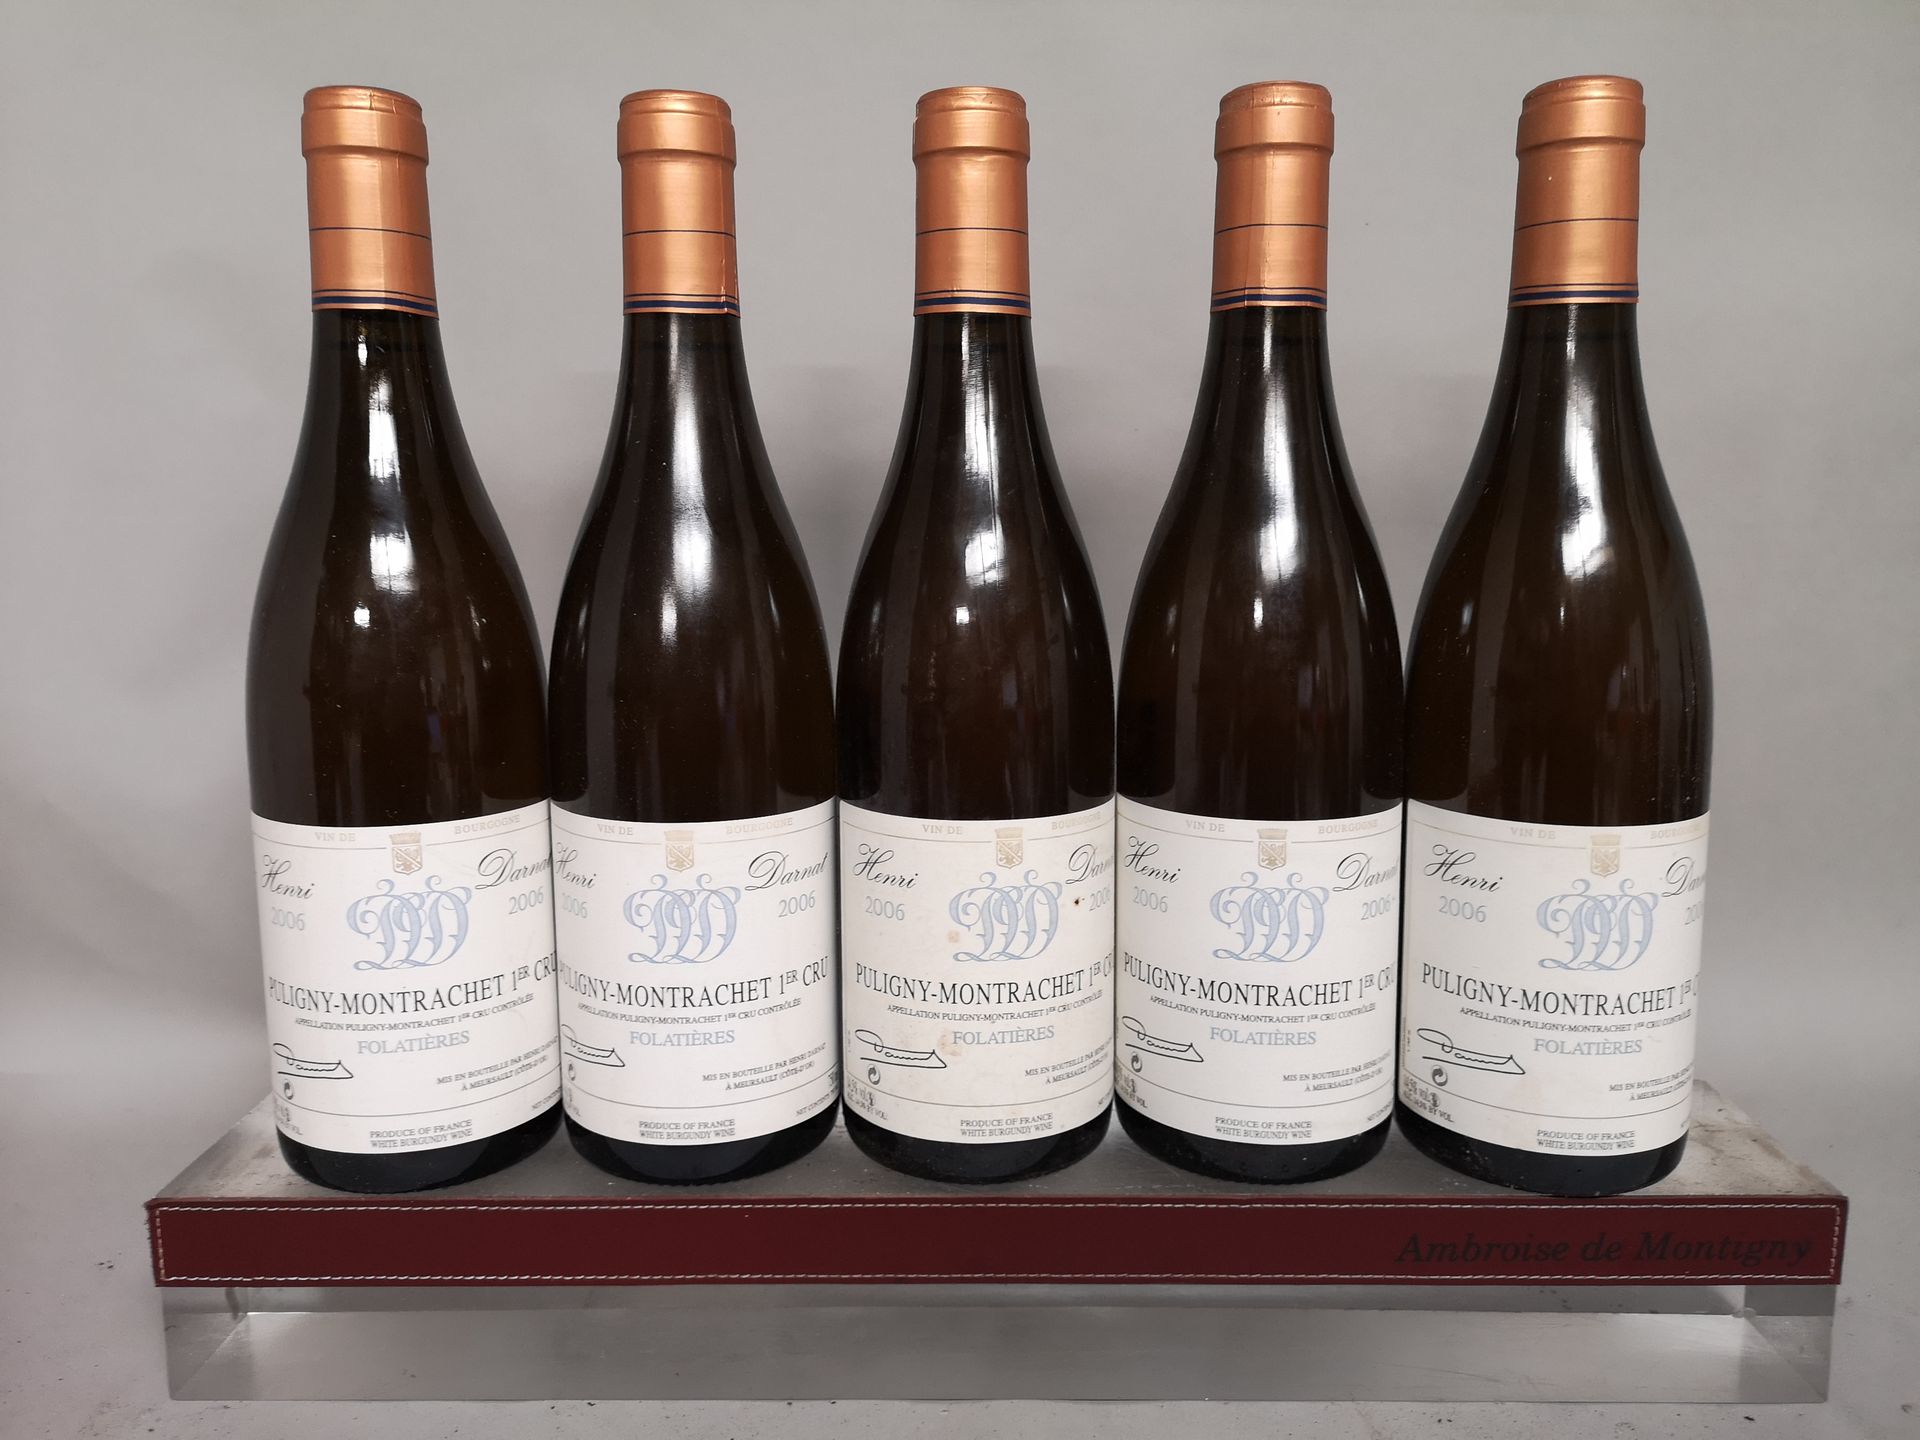 Null 5 bottles PULIGNY MONTRACHET 1er cru "Folatières" - Henri DARNAT 2006 

Sli&hellip;